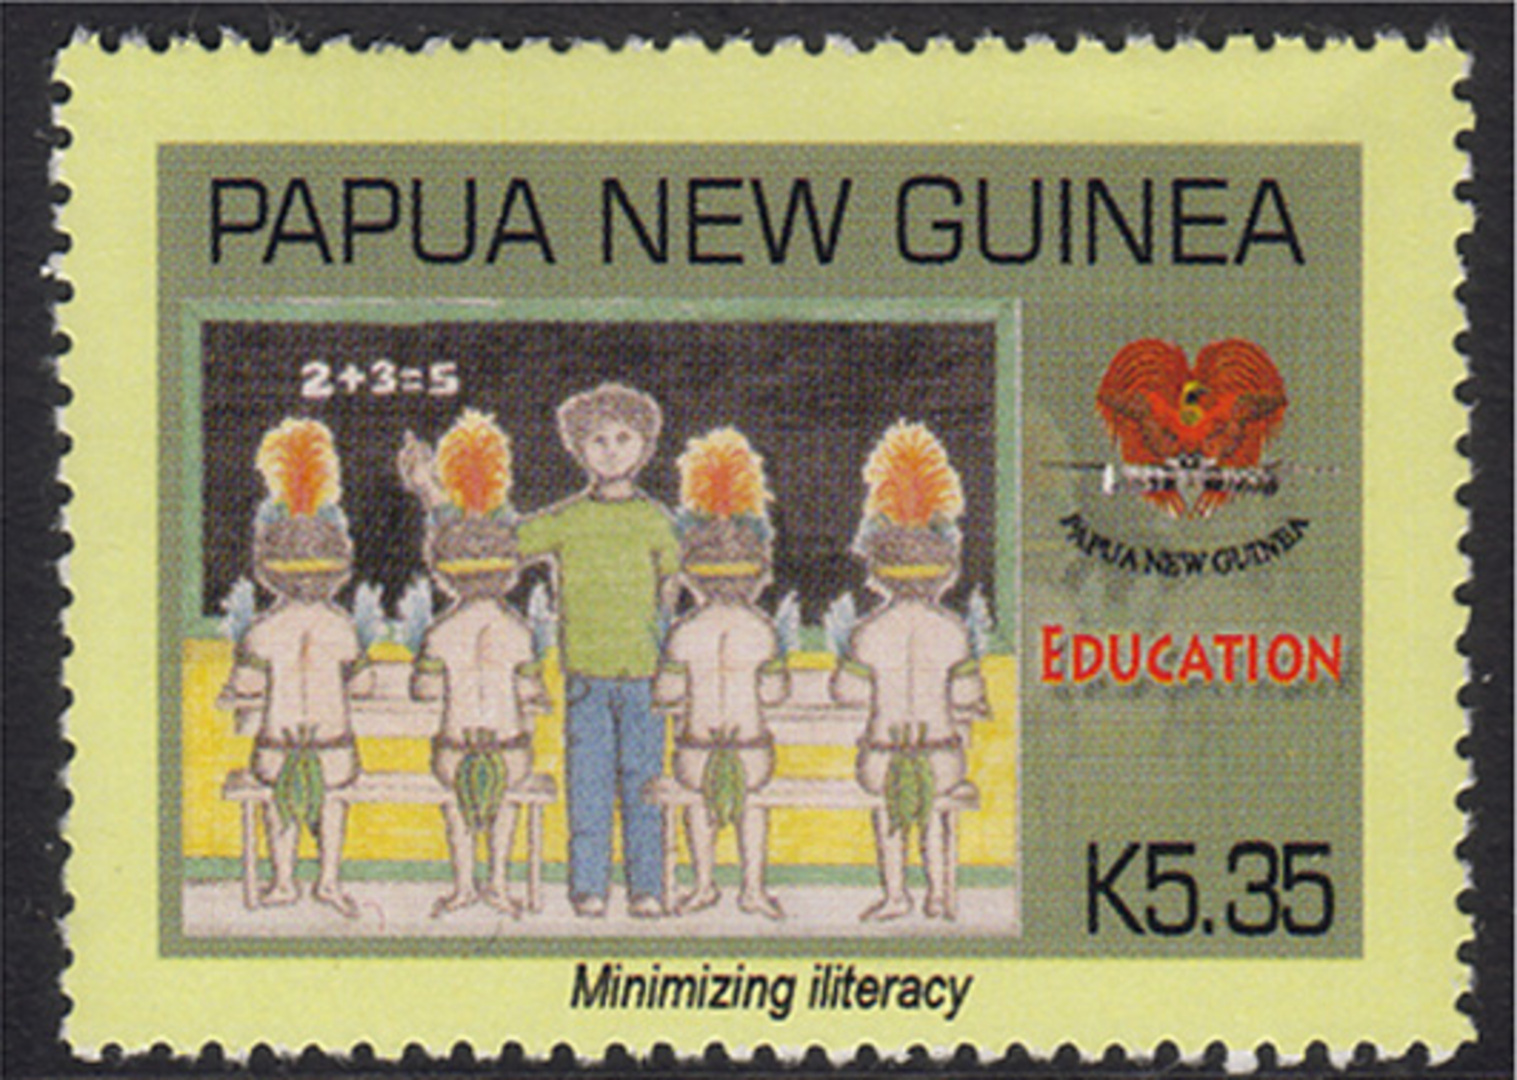 2007 5k35 "Minimizing iliteracy" stamp from Papua New Guinea